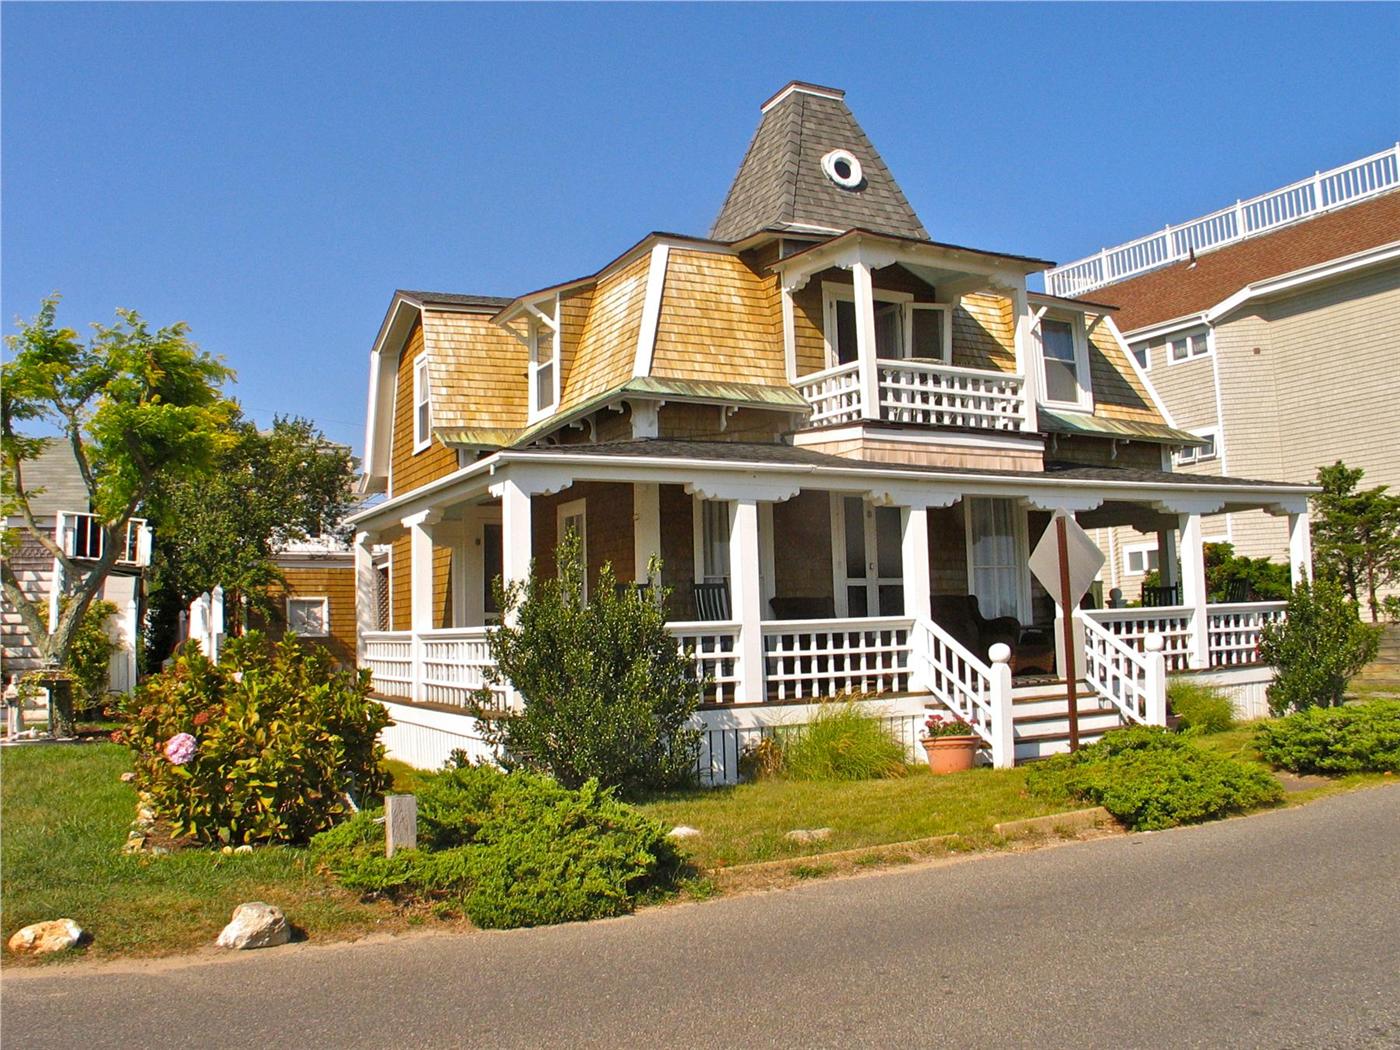 Oak Bluffs Vacation Rental home in Martha's Vineyard MA 02557, The